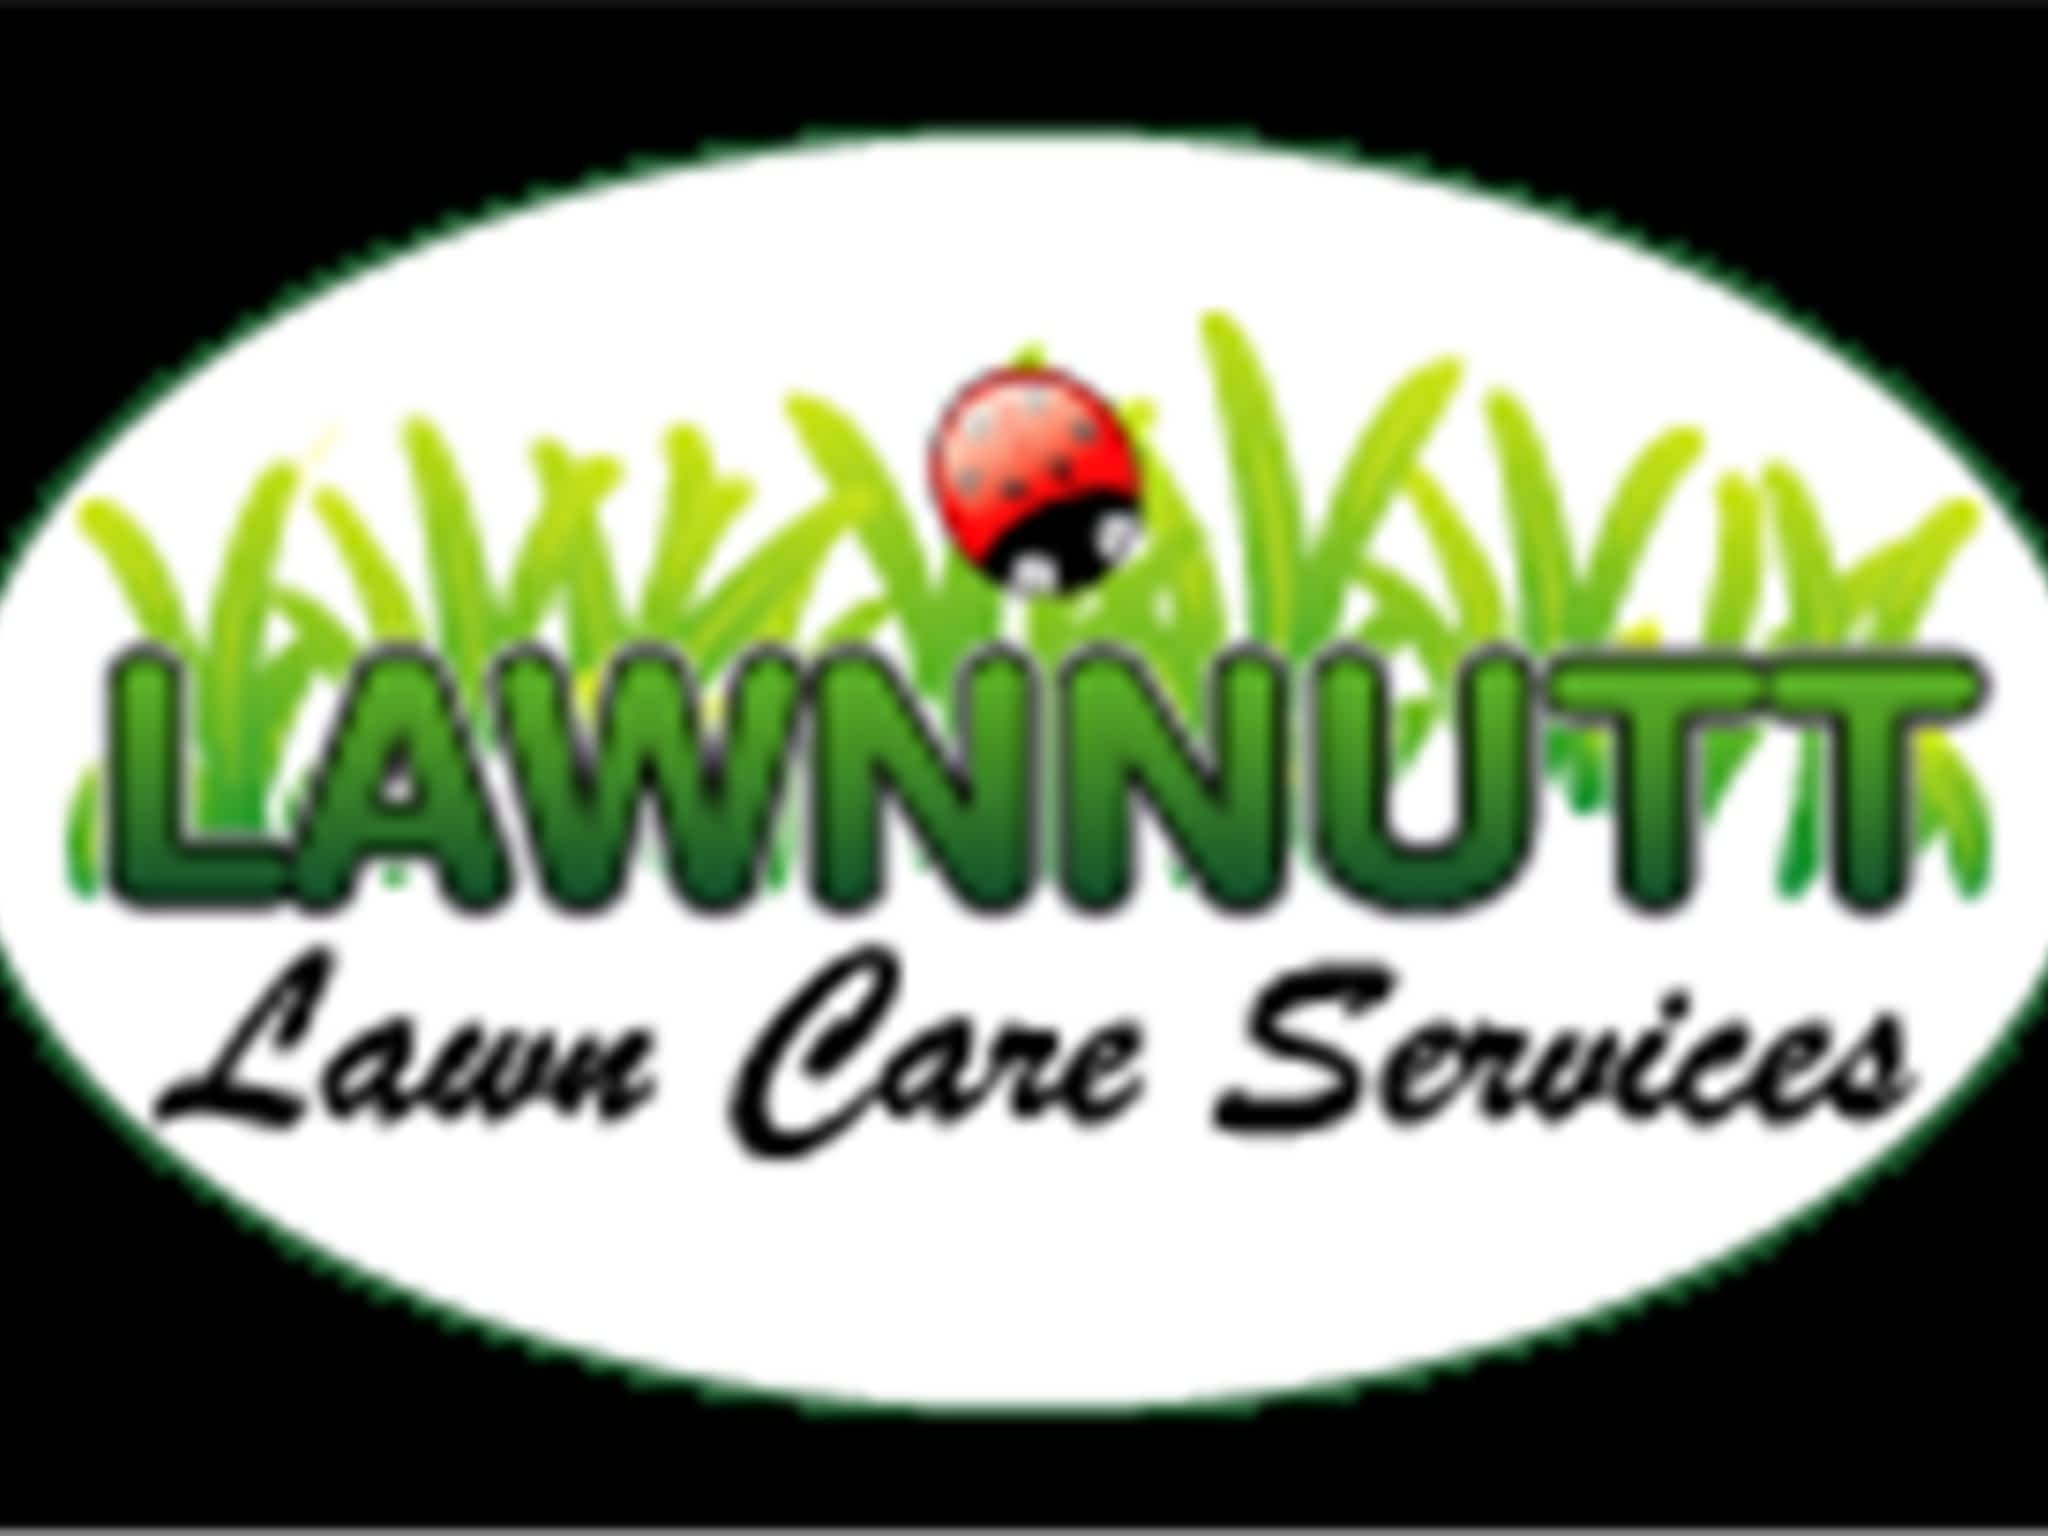 photo Lawnnutt Lawn Care Services